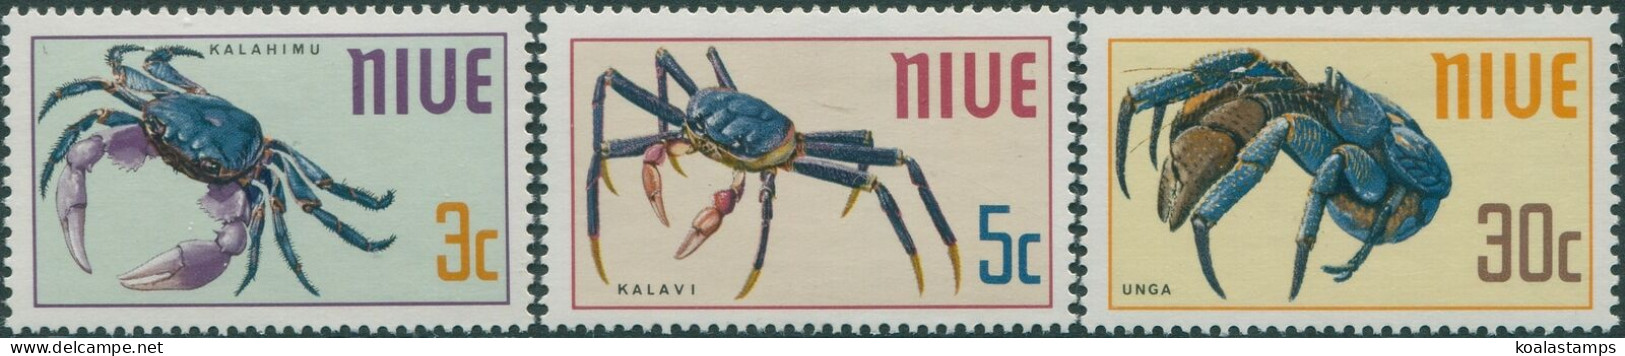 Niue 1970 SG151-153 Edible Crabs Set MNH - Niue